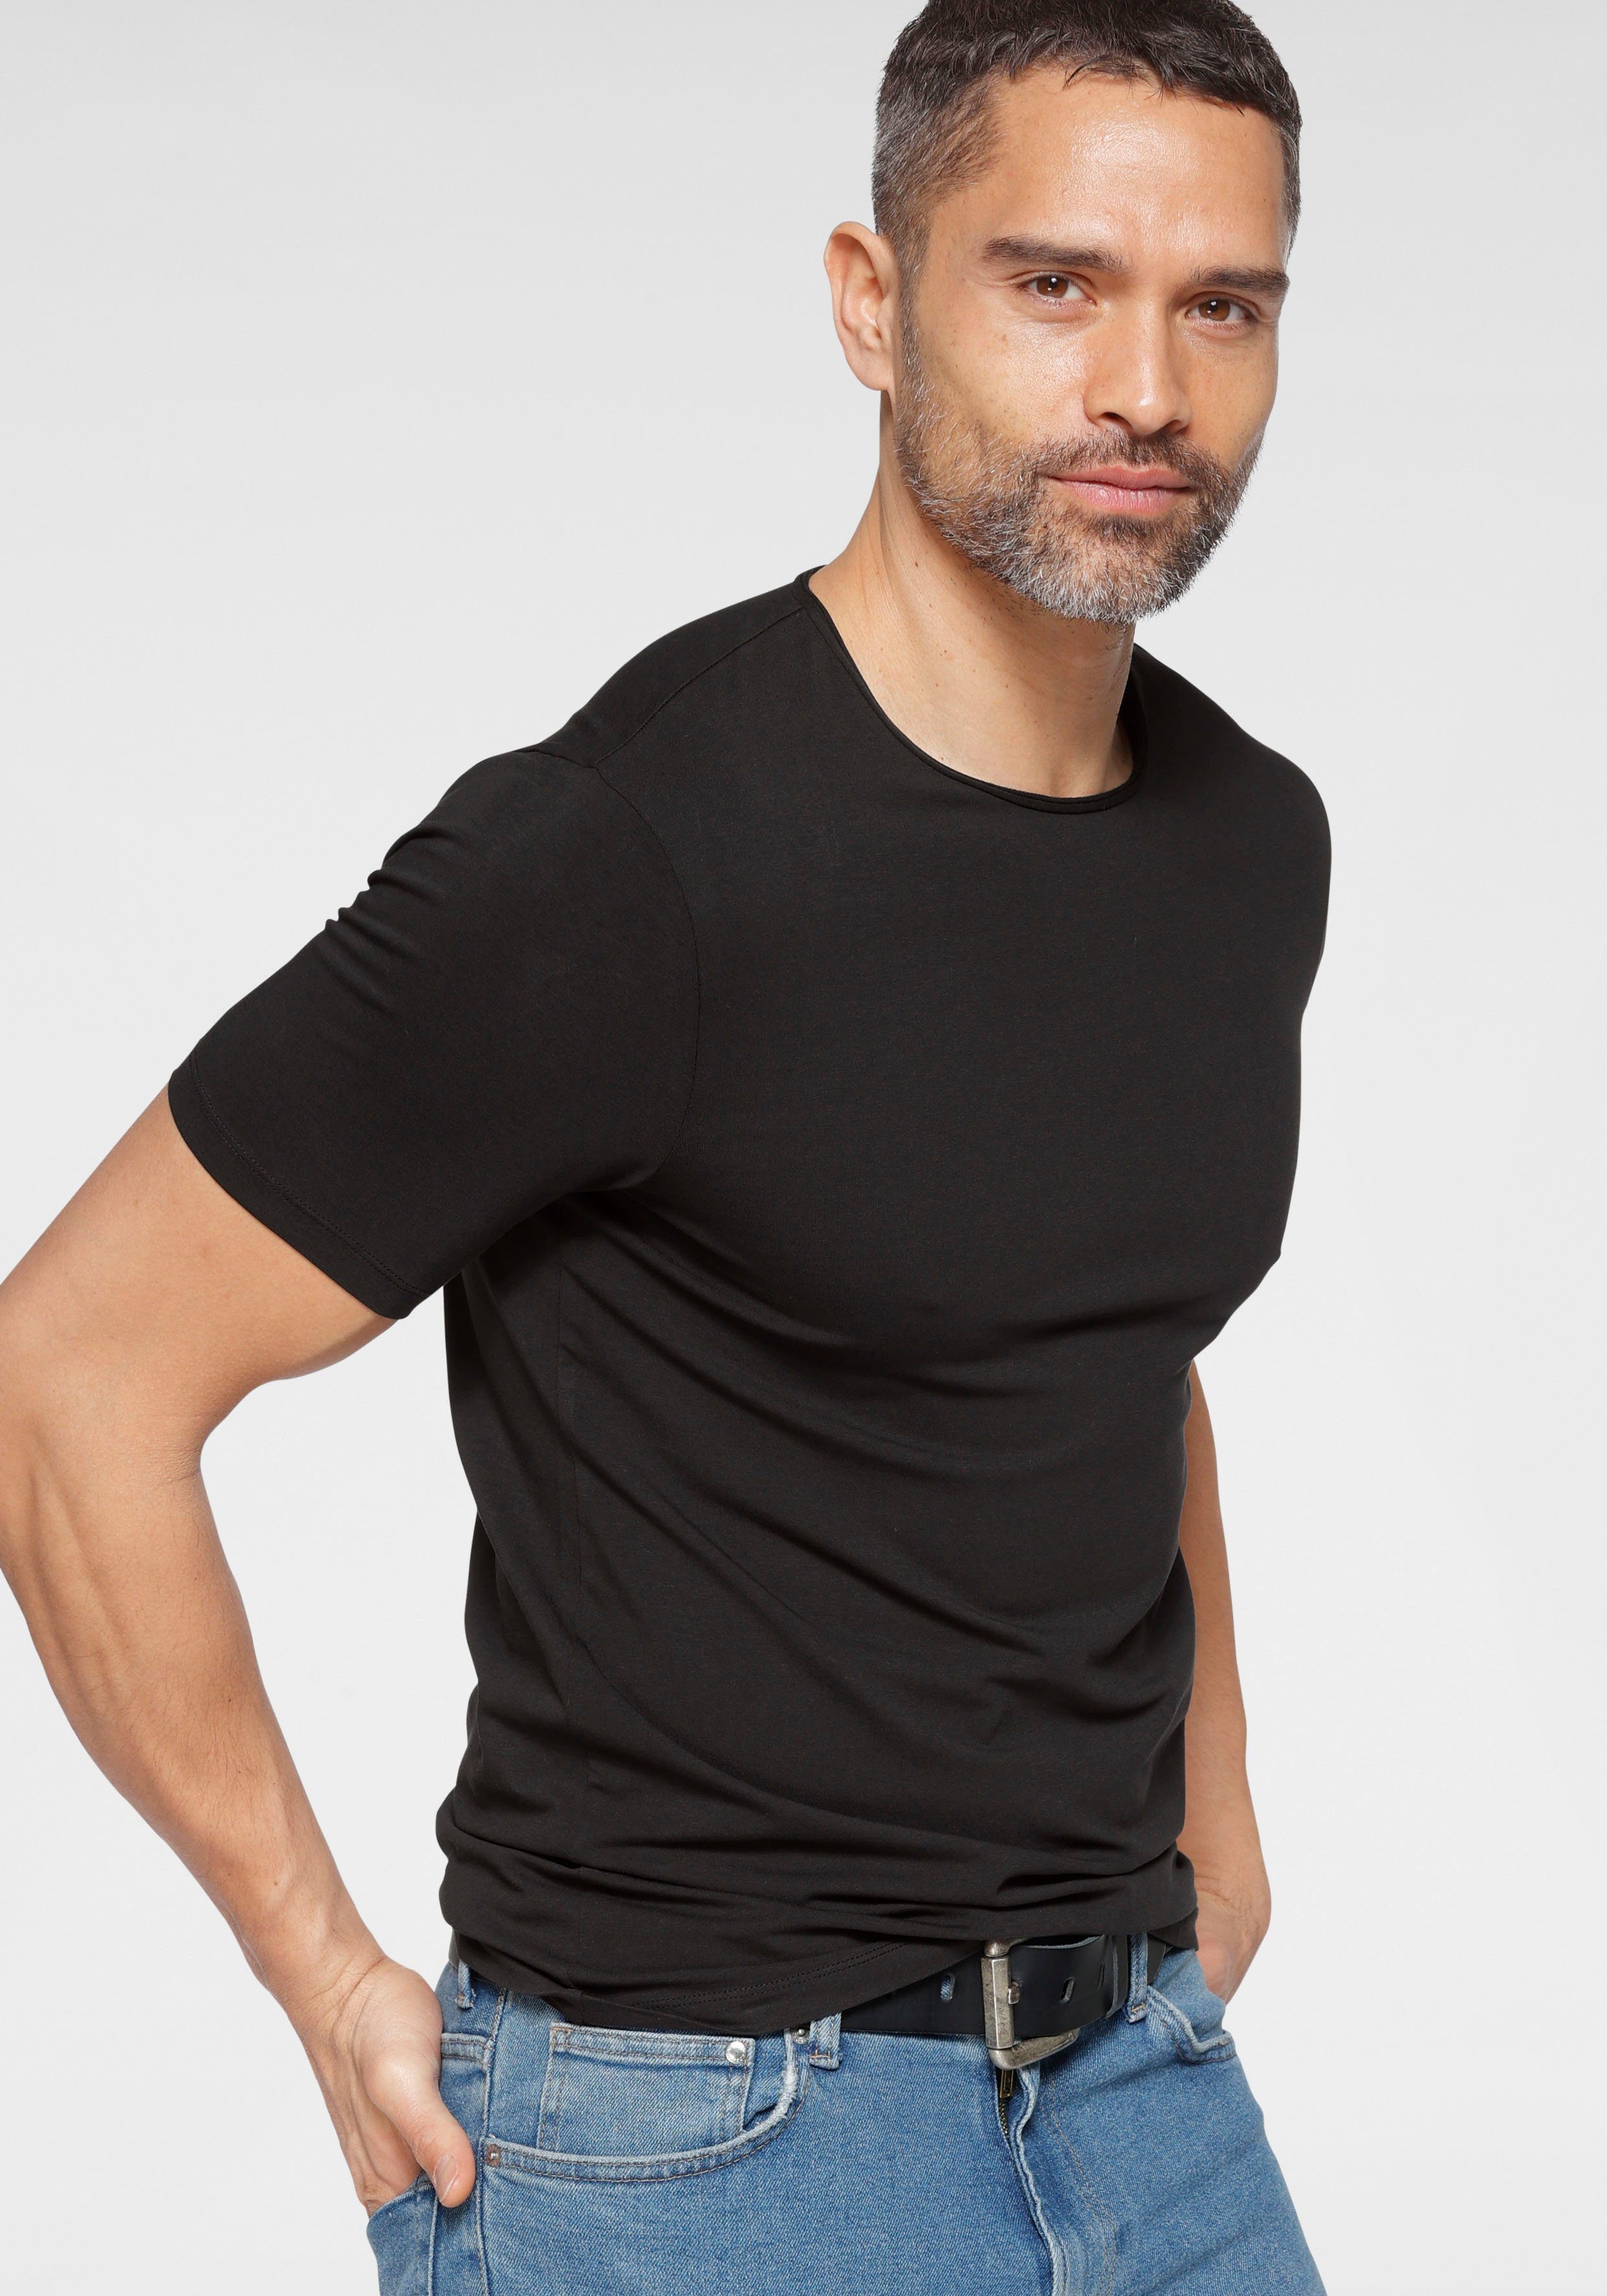 OLYMP T-Shirt fit Five schwarz Jersey Level feinem body aus